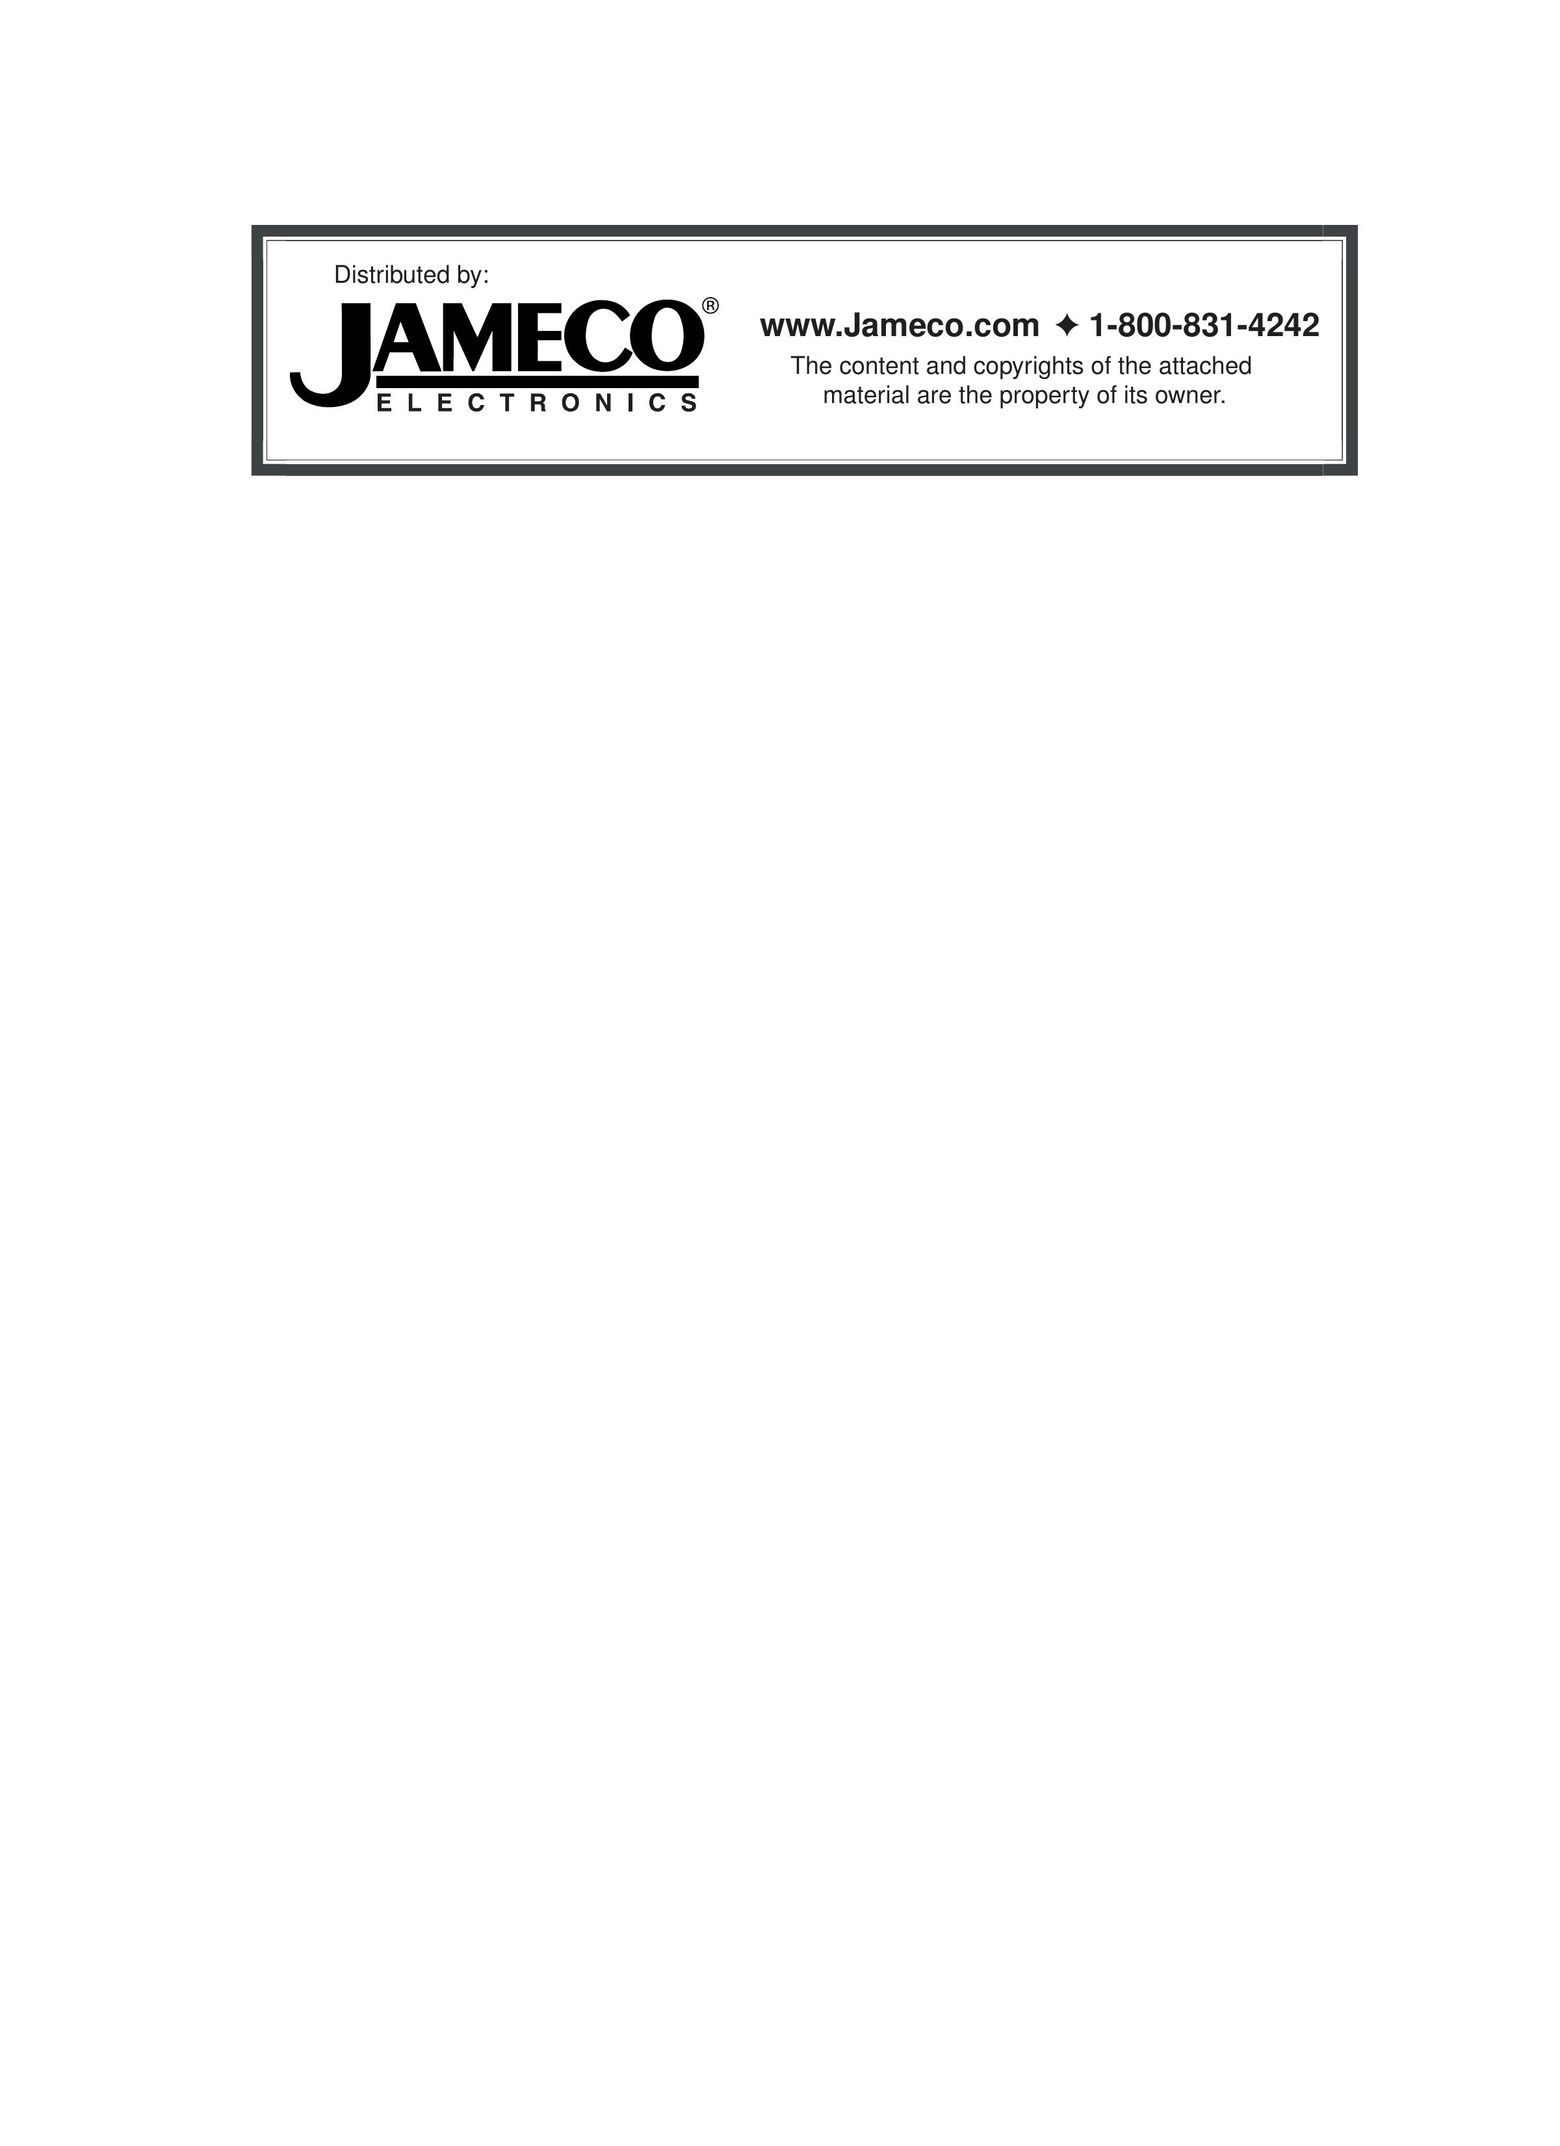 Jameco Electronics Superpro Series Computer Hardware User Manual